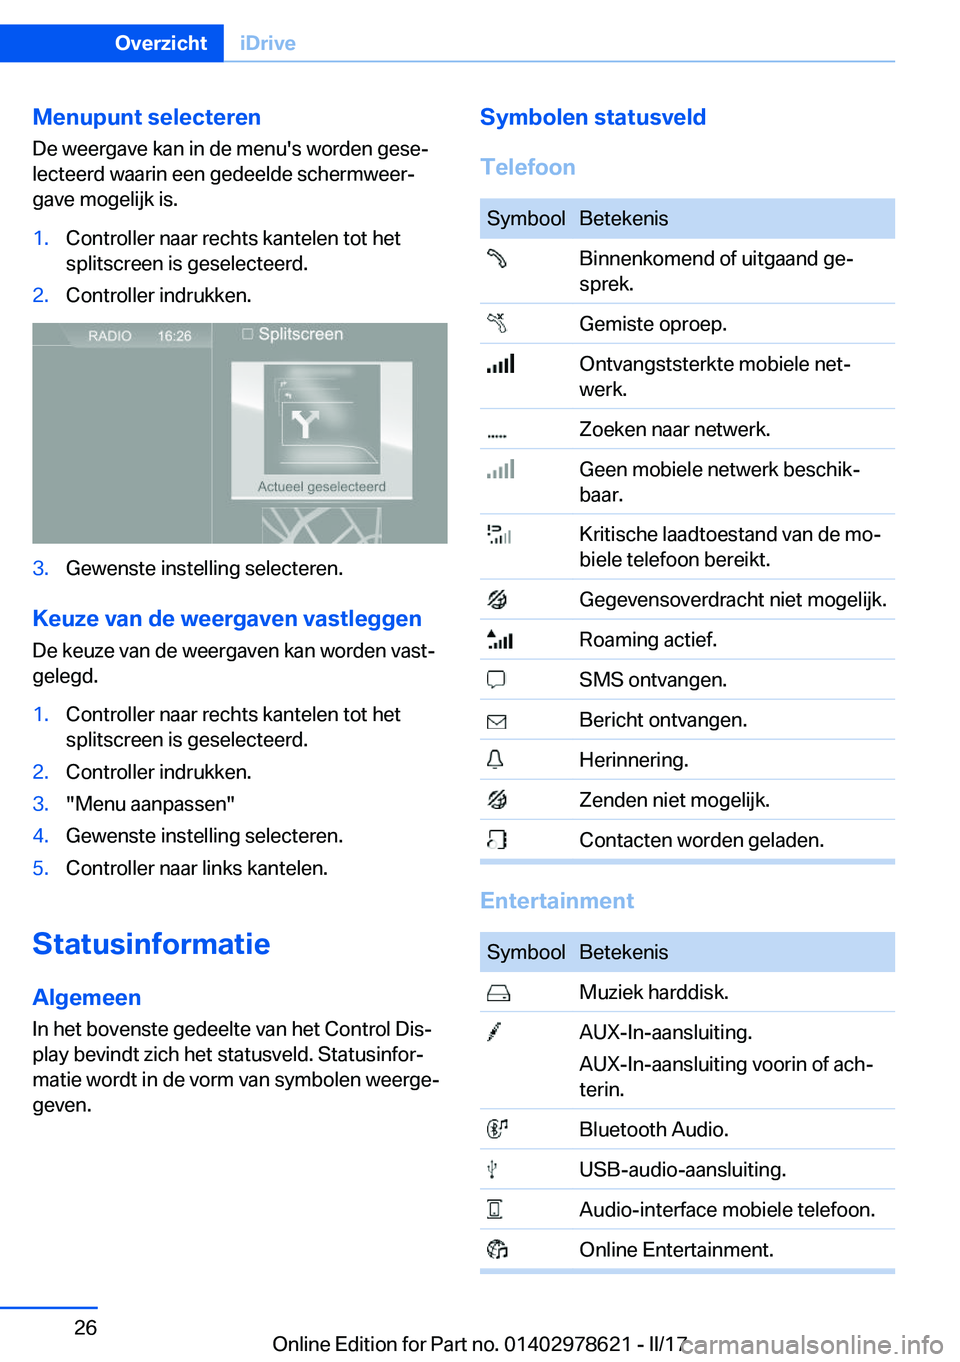 BMW 7 SERIES 2018  Instructieboekjes (in Dutch) �M�e�n�u�p�u�n�t��s�e�l�e�c�t�e�r�e�n�D�e� �w�e�e�r�g�a�v�e� �k�a�n� �i�n� �d�e� �m�e�n�u�'�s� �w�o�r�d�e�n� �g�e�s�ej
�l�e�c�t�e�e�r�d� �w�a�a�r�i�n� �e�e�n� �g�e�d�e�e�l�d�e� �s�c�h�e�r�m�w�e�